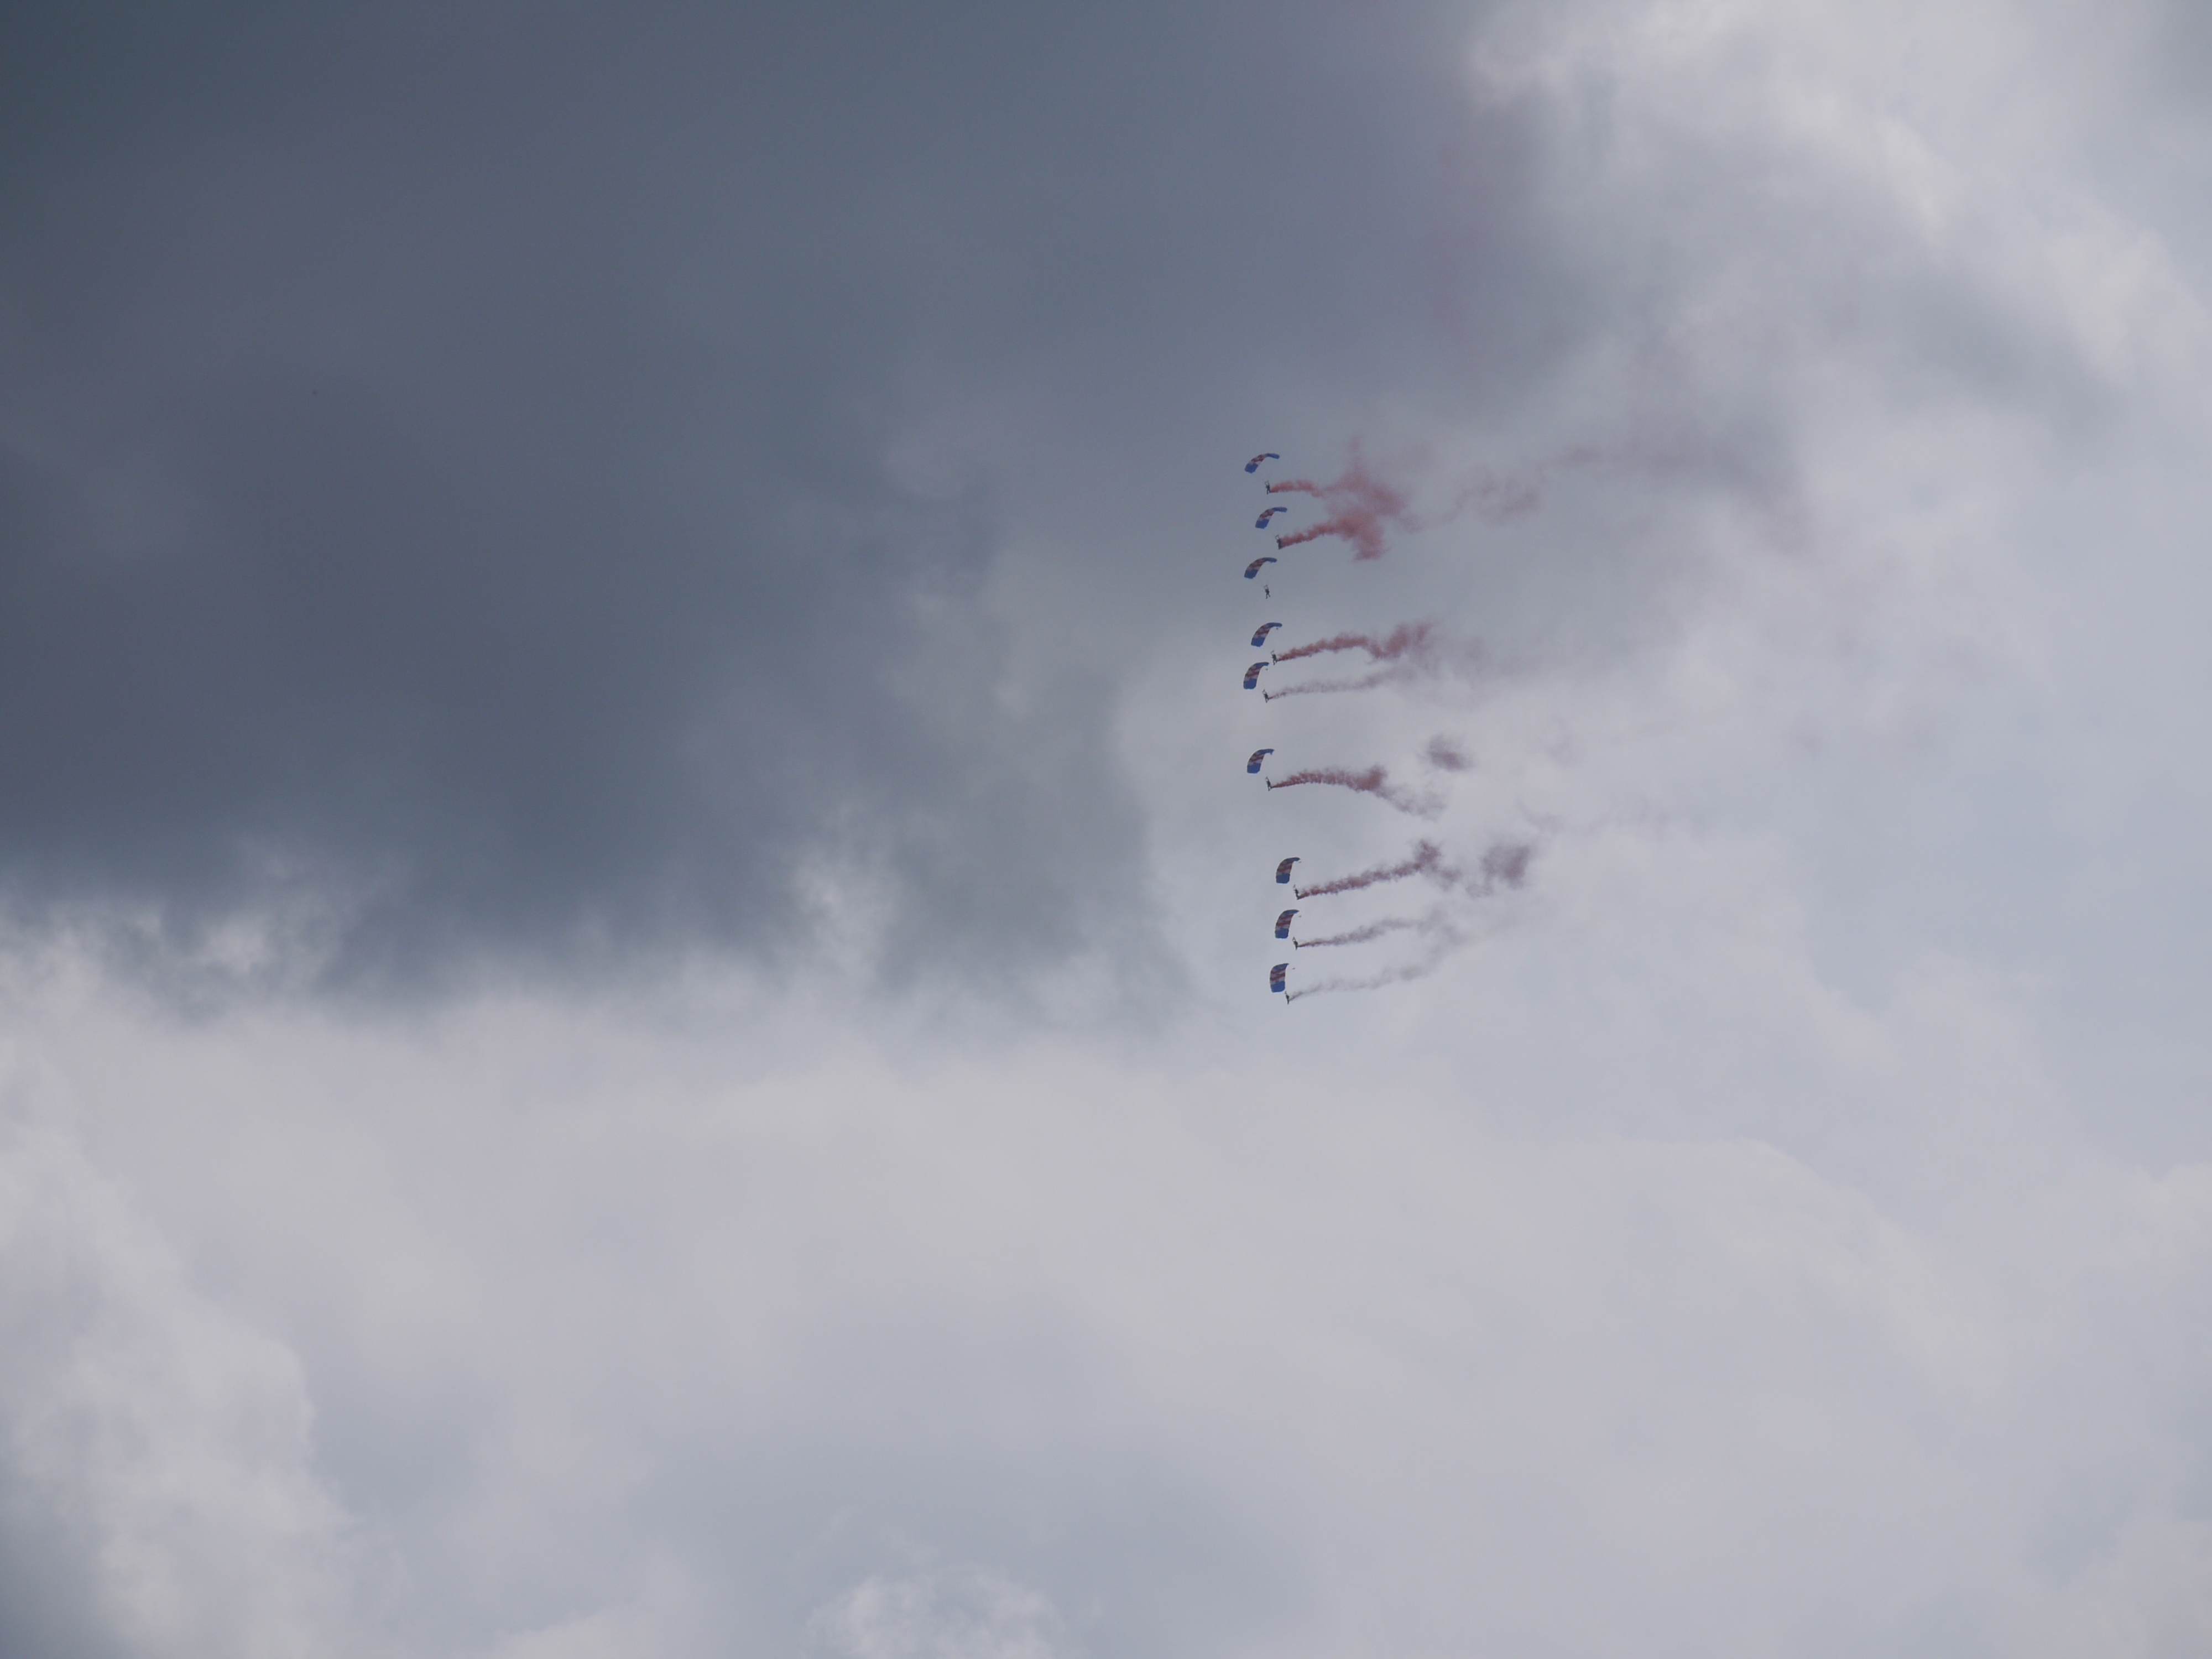 RAF Leeming Parachute Training, viewed from Dalesgate